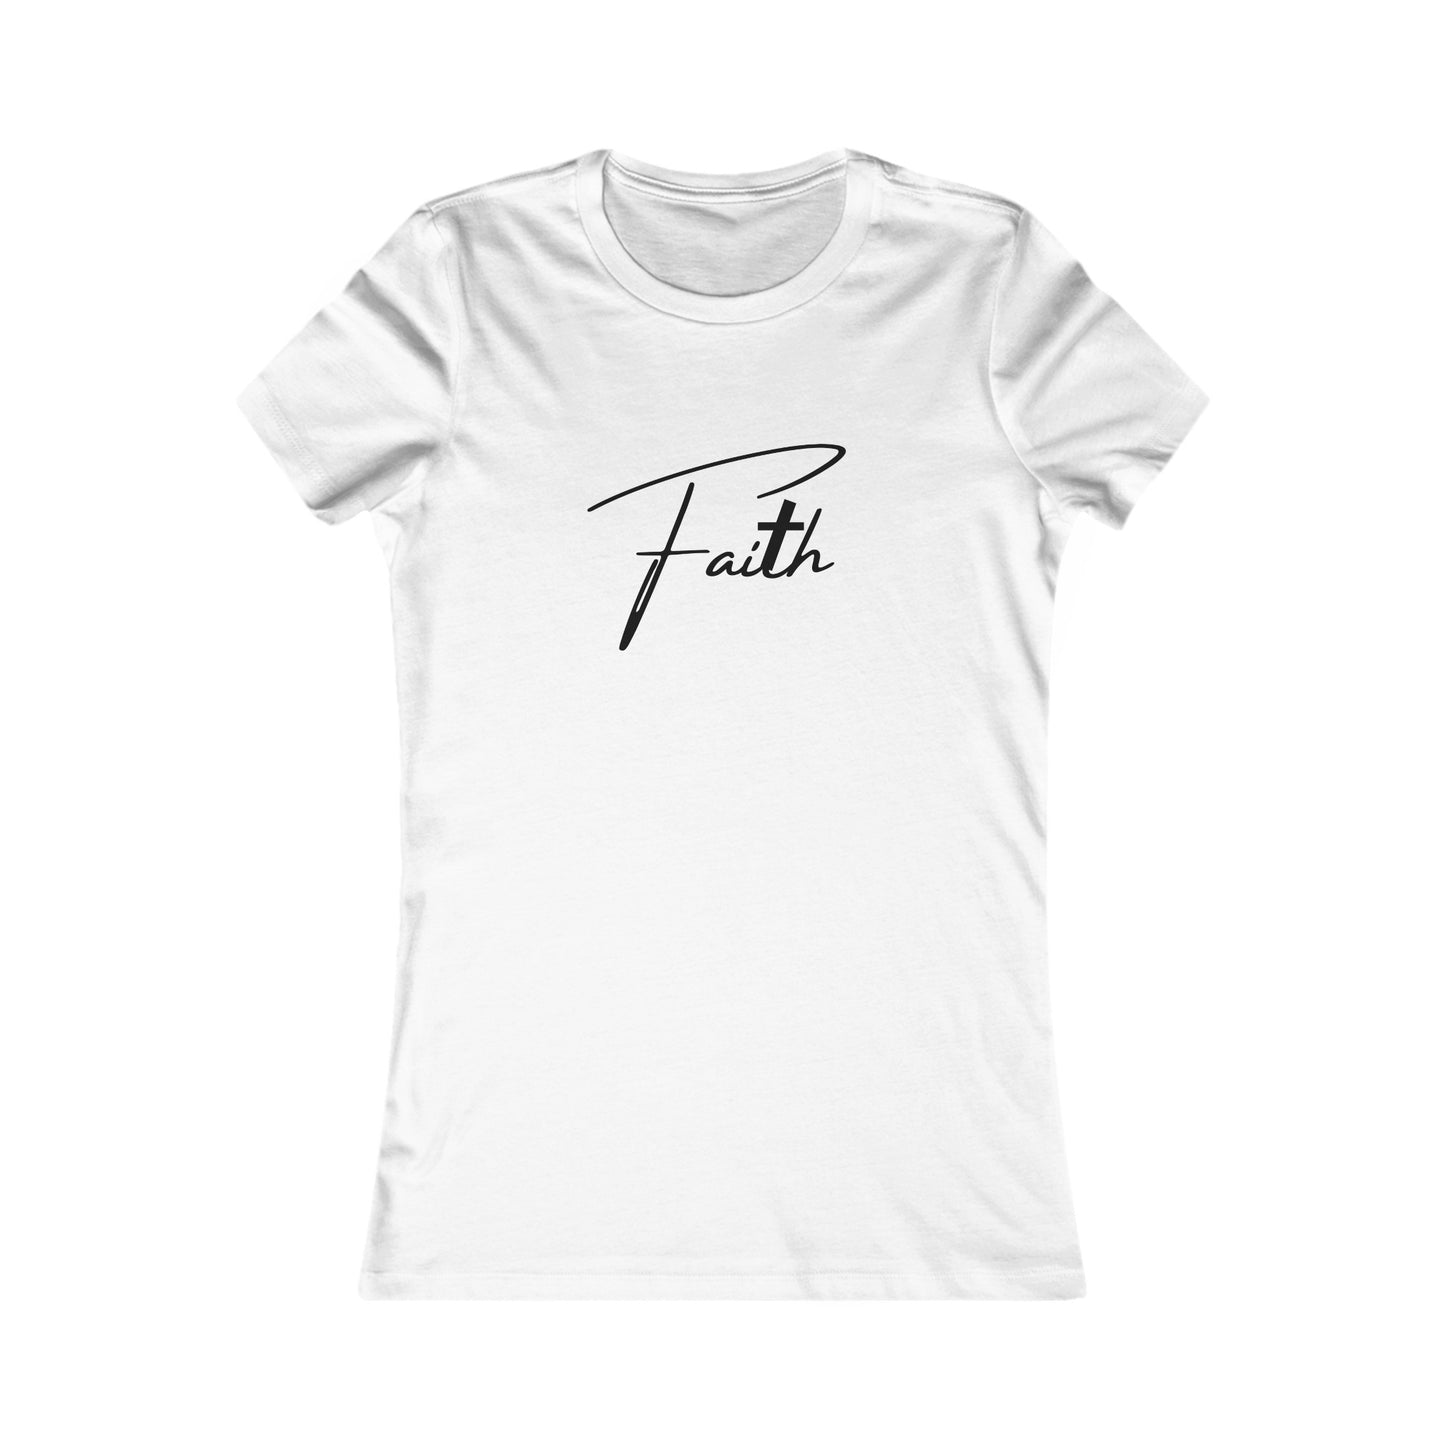 Cross-ed T Faith Women's Tshirt (Black Logo)